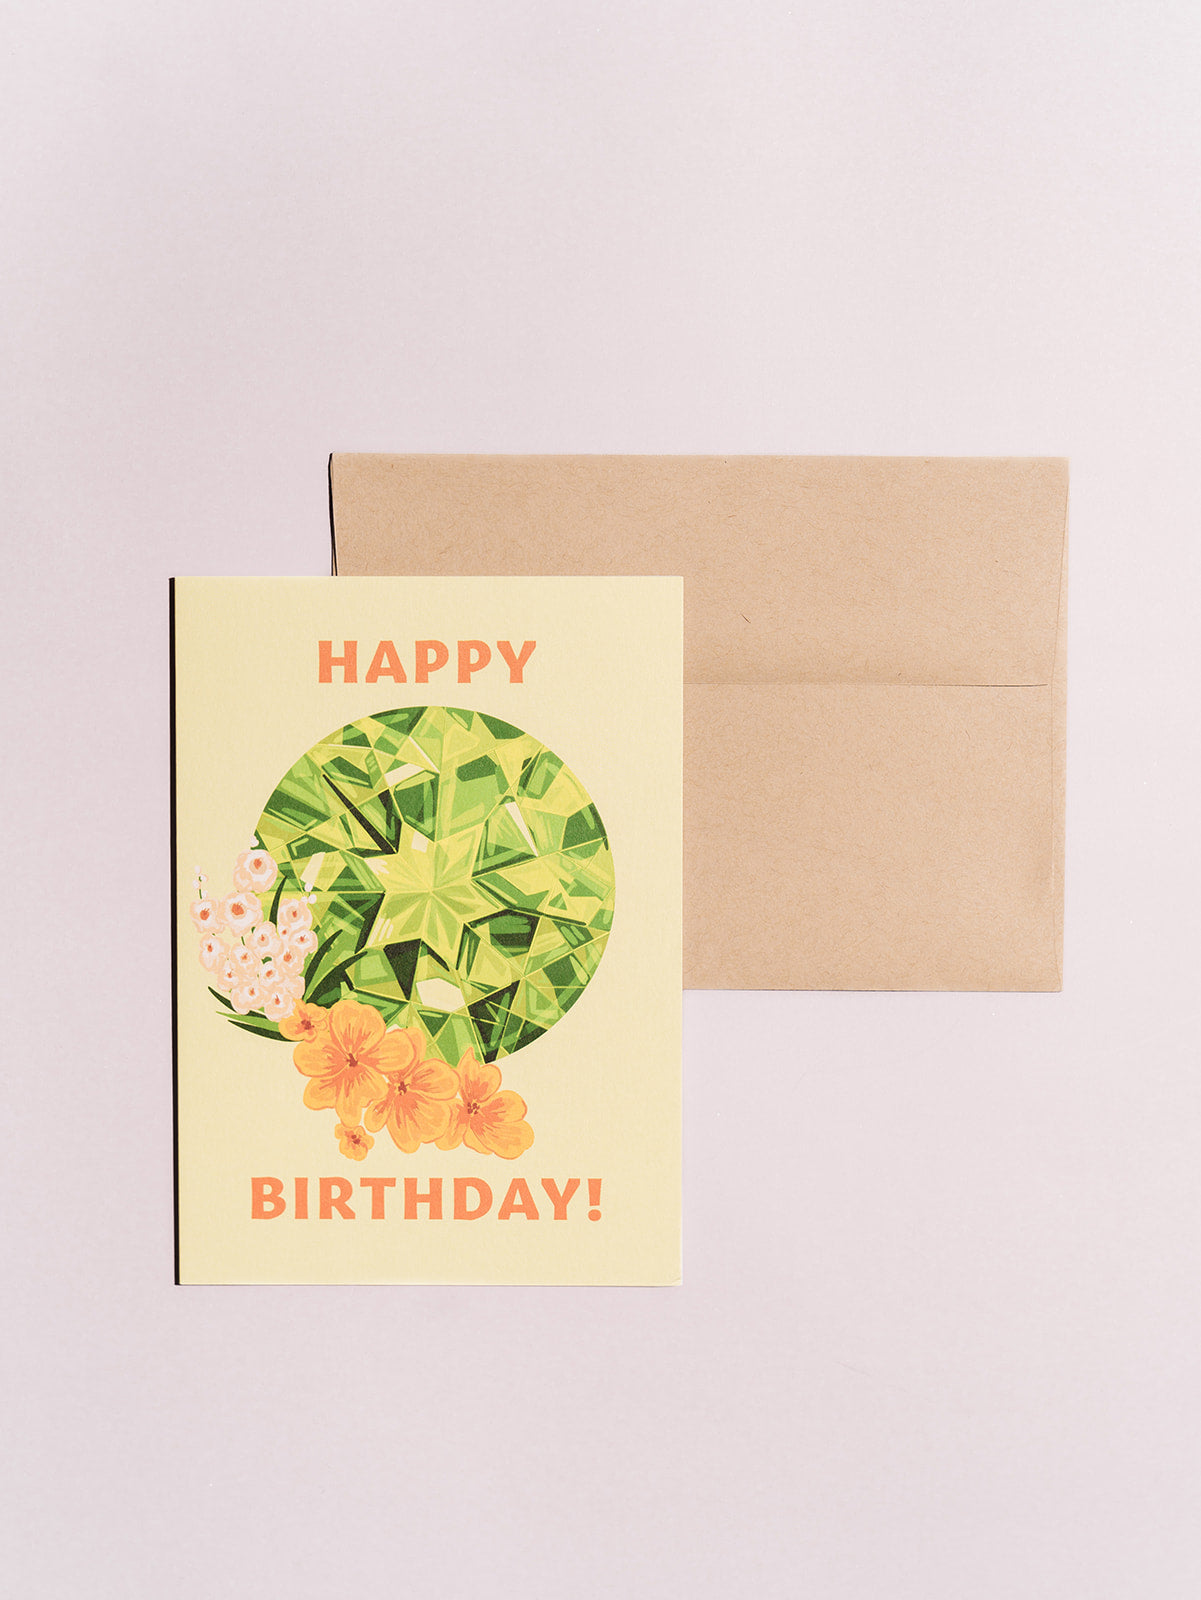 august birthstone gemstone peridot birthday card with kraft envelope